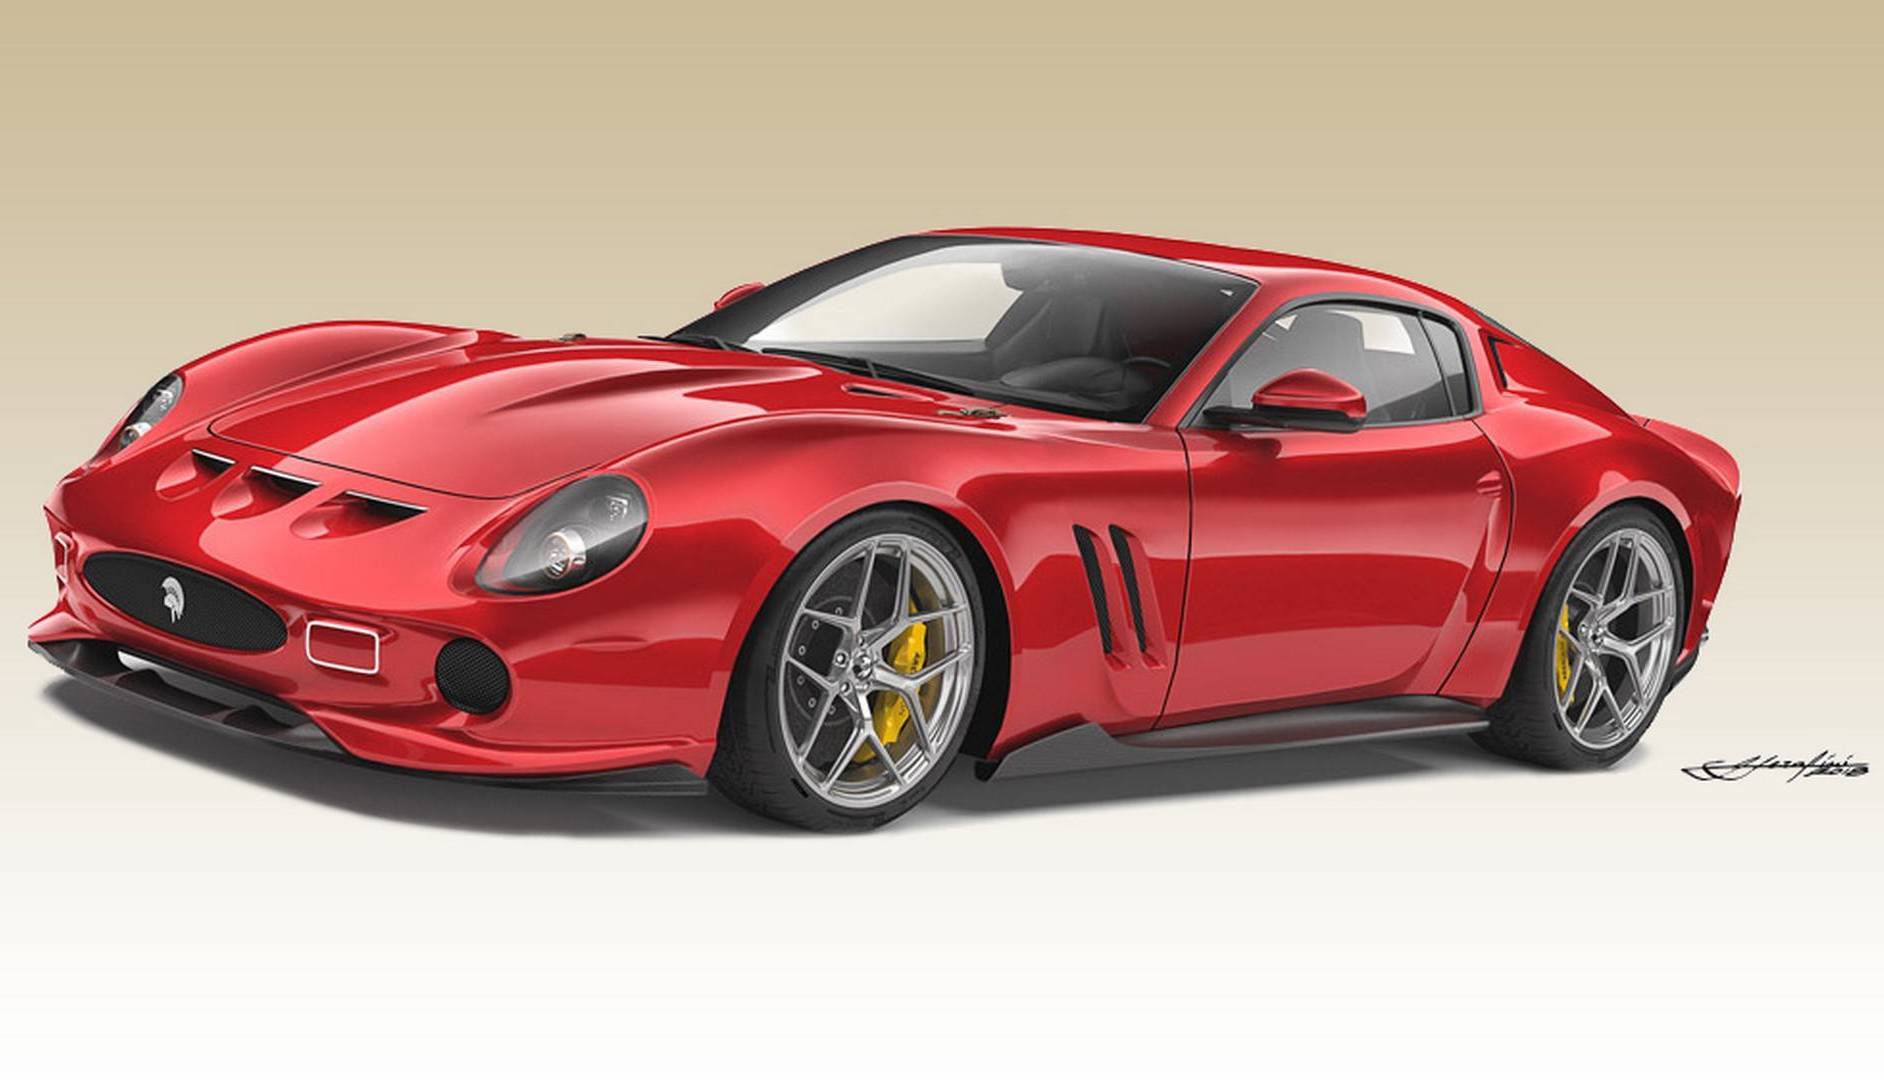 Ares Design Ferrari 250 GTO is a spectacular modern remake